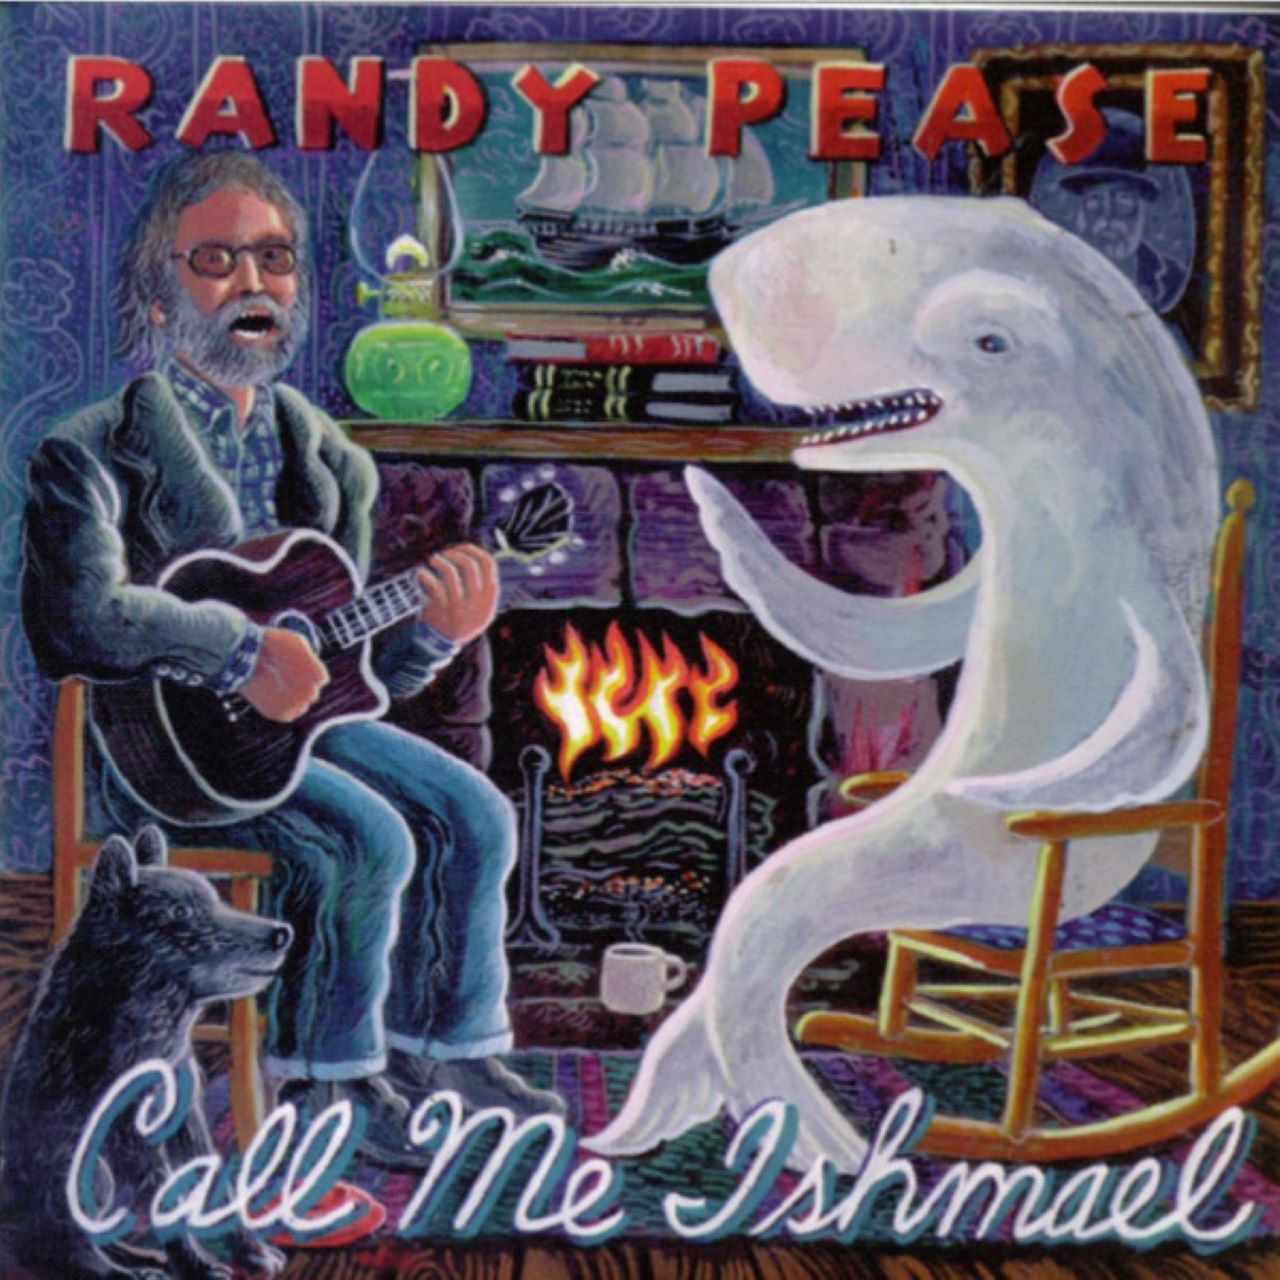 Randy Pease - Call Me Ishmael cover album